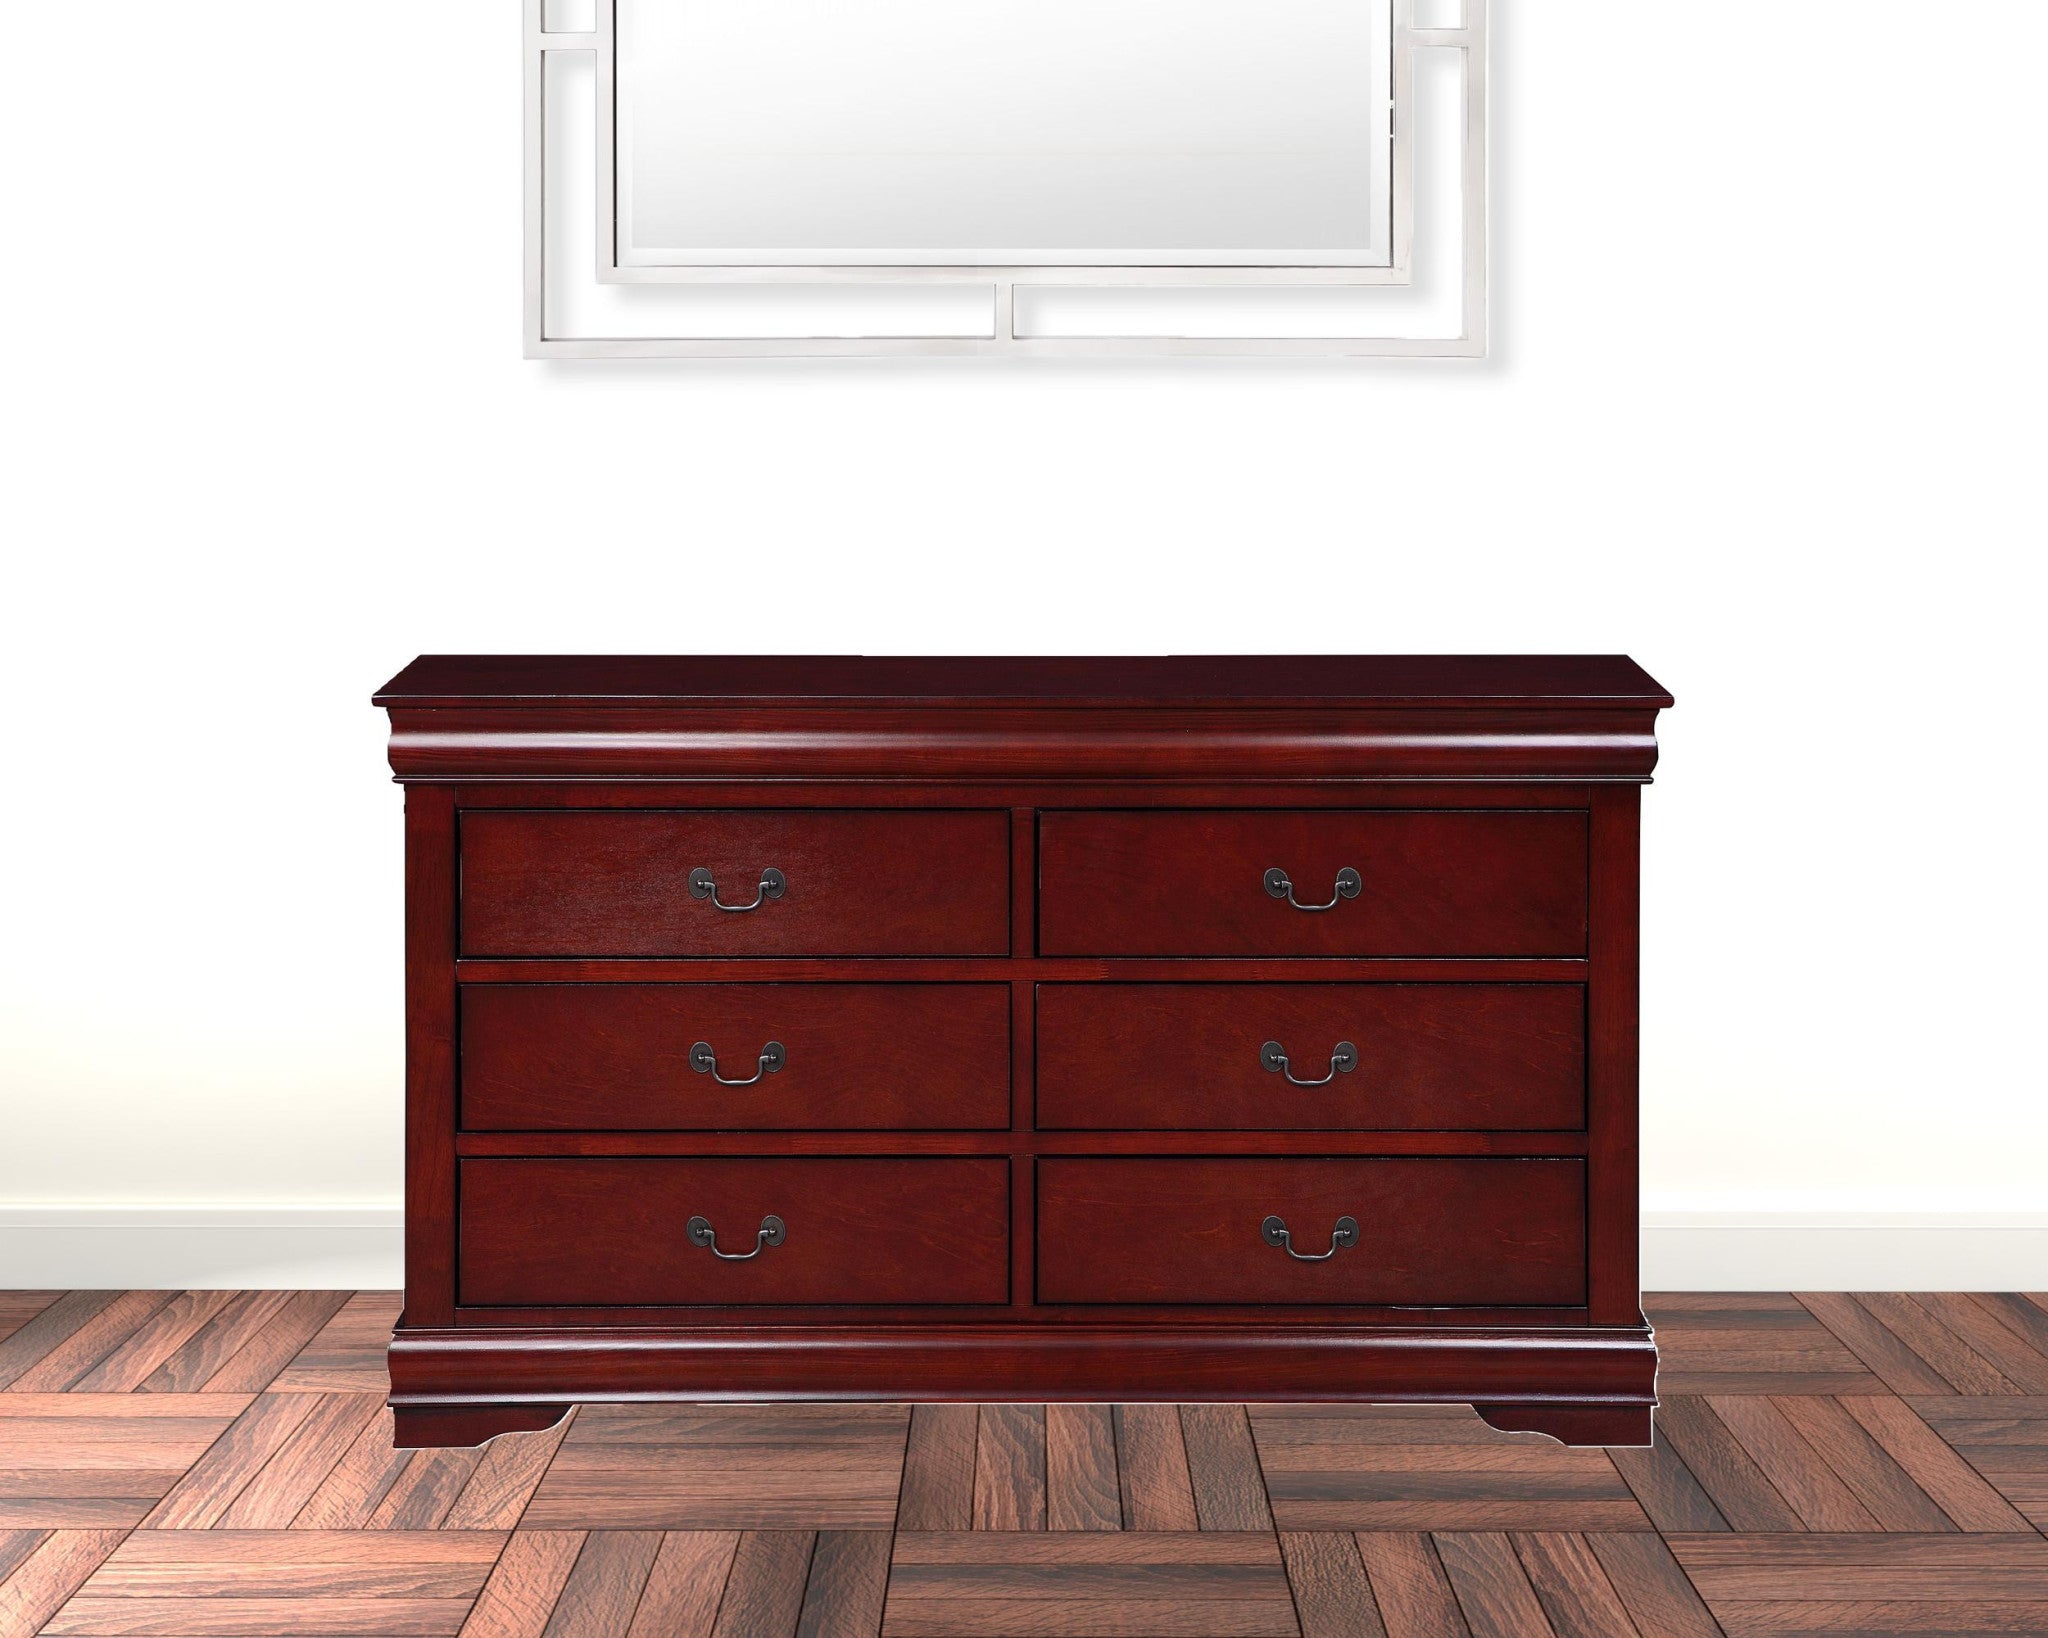 57' X 15' X 33' Cherry Wood Dresser